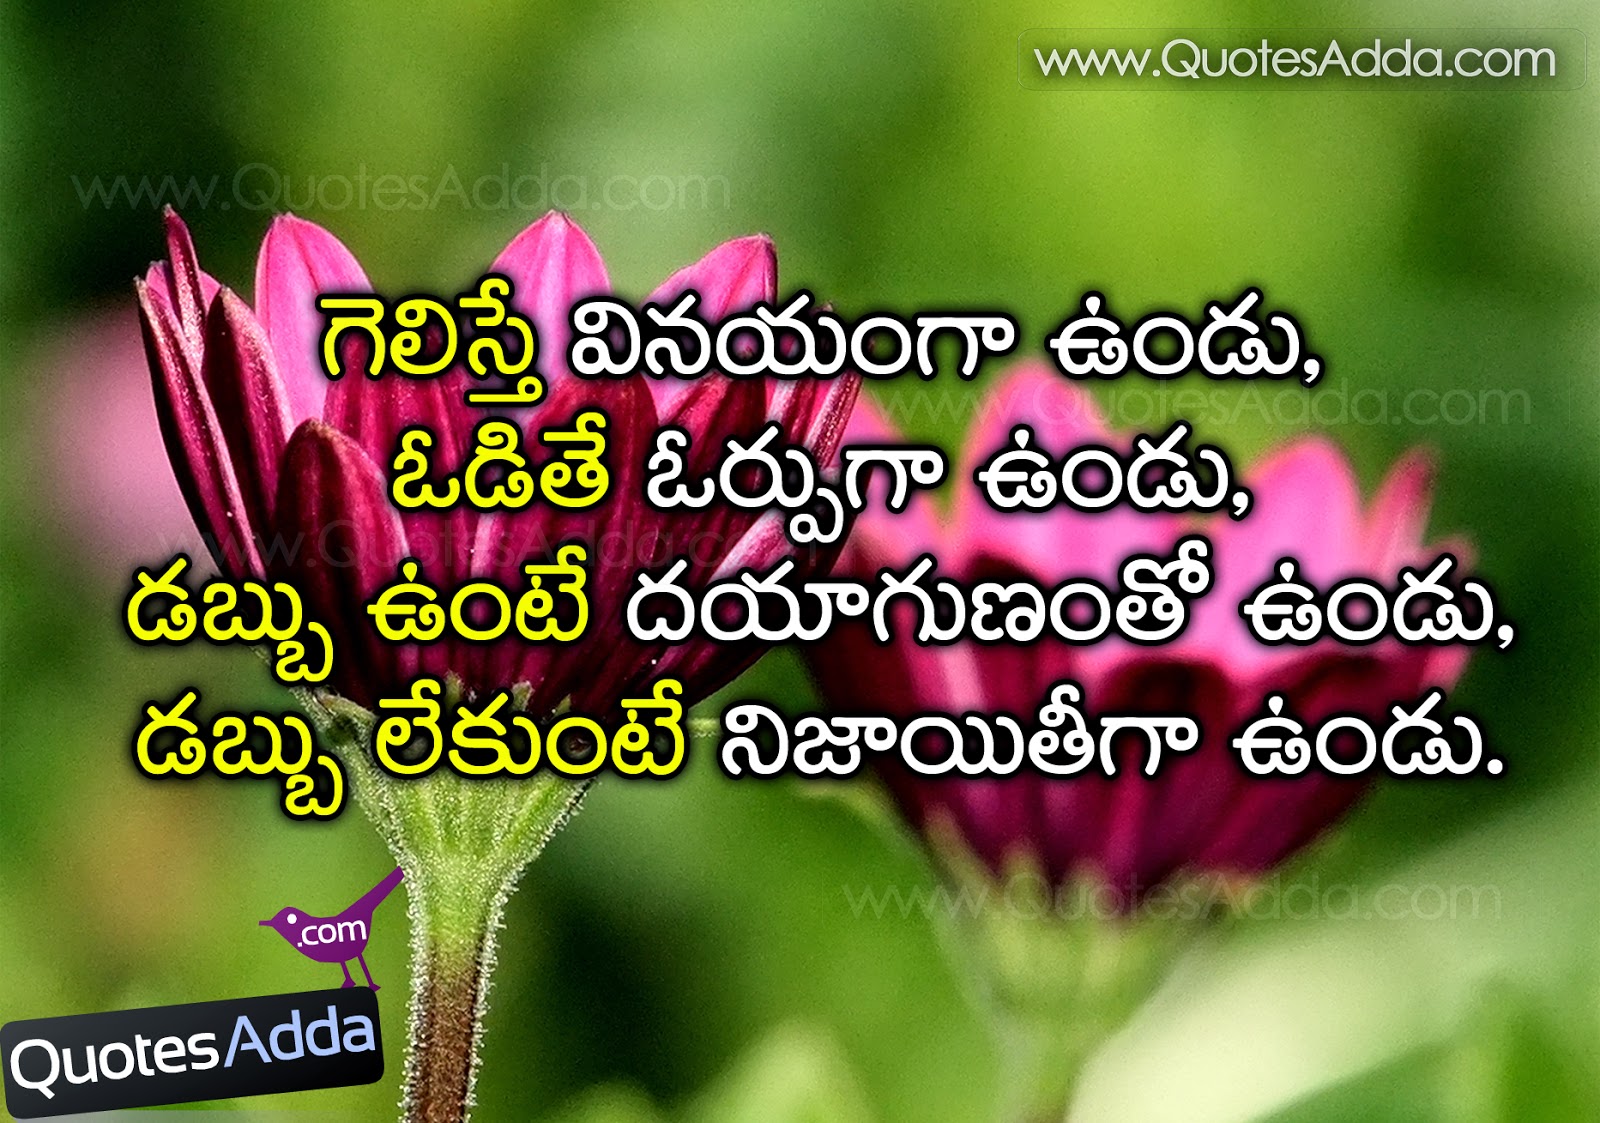 Telugu Nice Life Quotations for Learners Jun05 QuotesAdda 1600—1123 rag